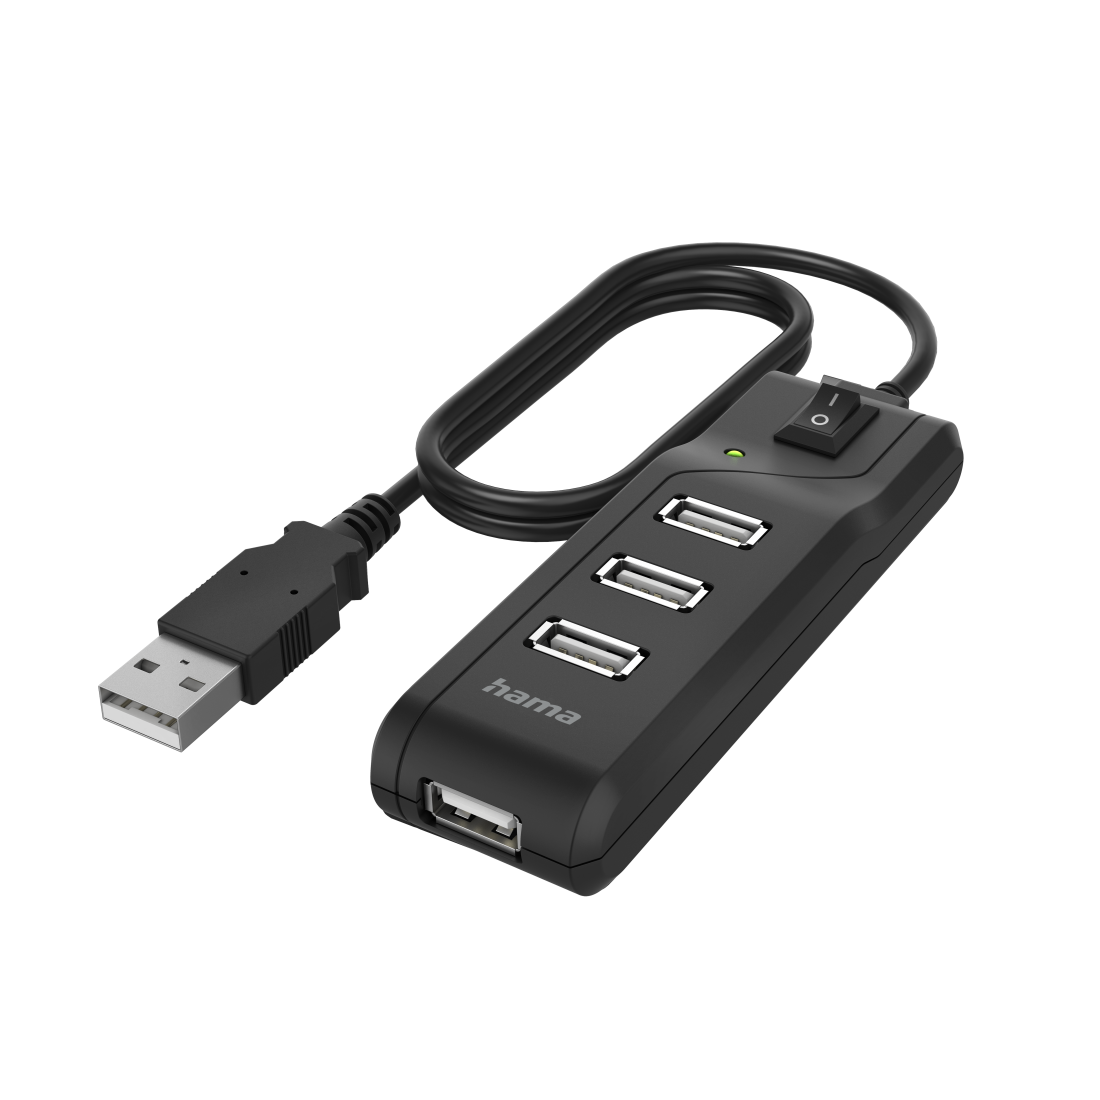 Concentrador USB, 4 puertos, USB 2.0, 480 Mbit/s, interruptor on/off | Hama